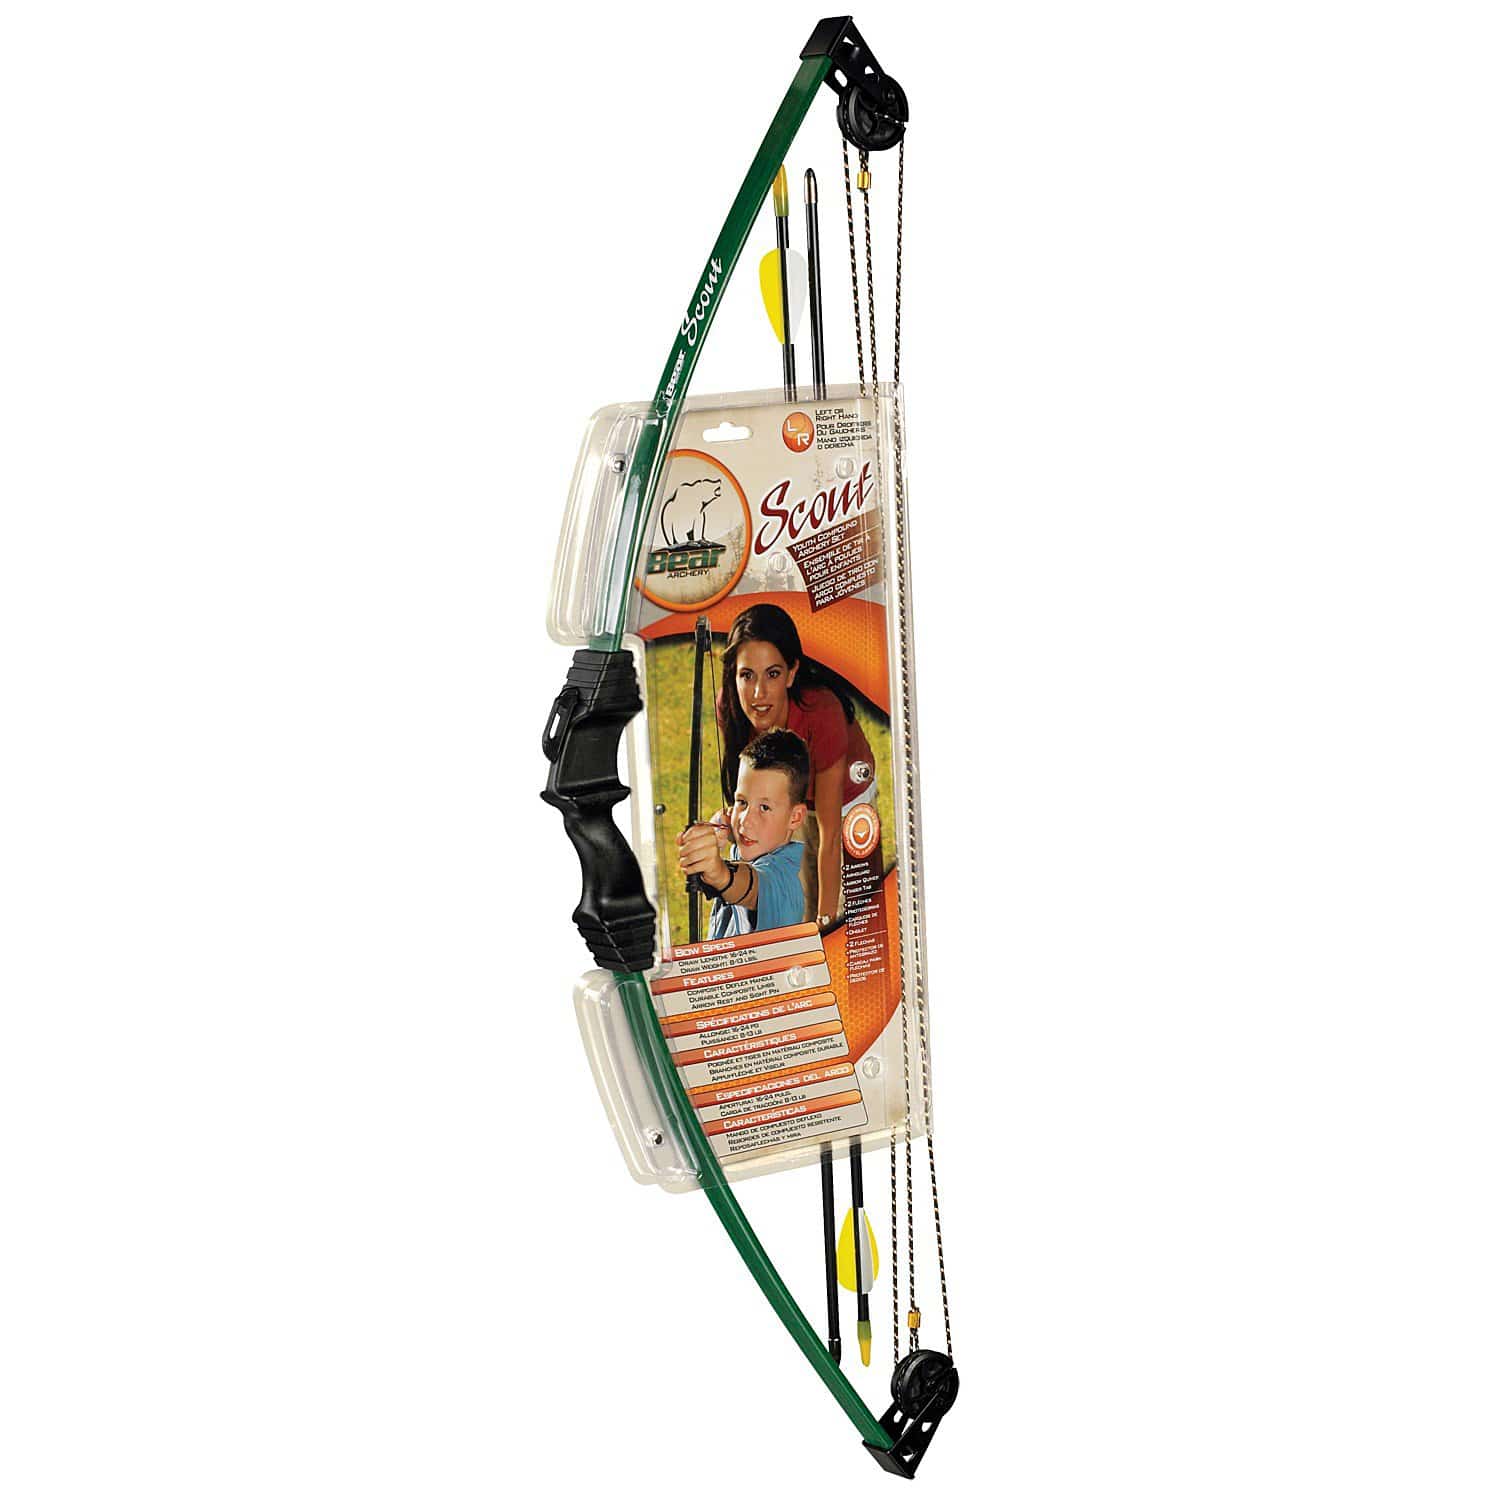 Bear Archery Archery : Bows Bear Archery Scout Bow Set 8 13   16 24 inch